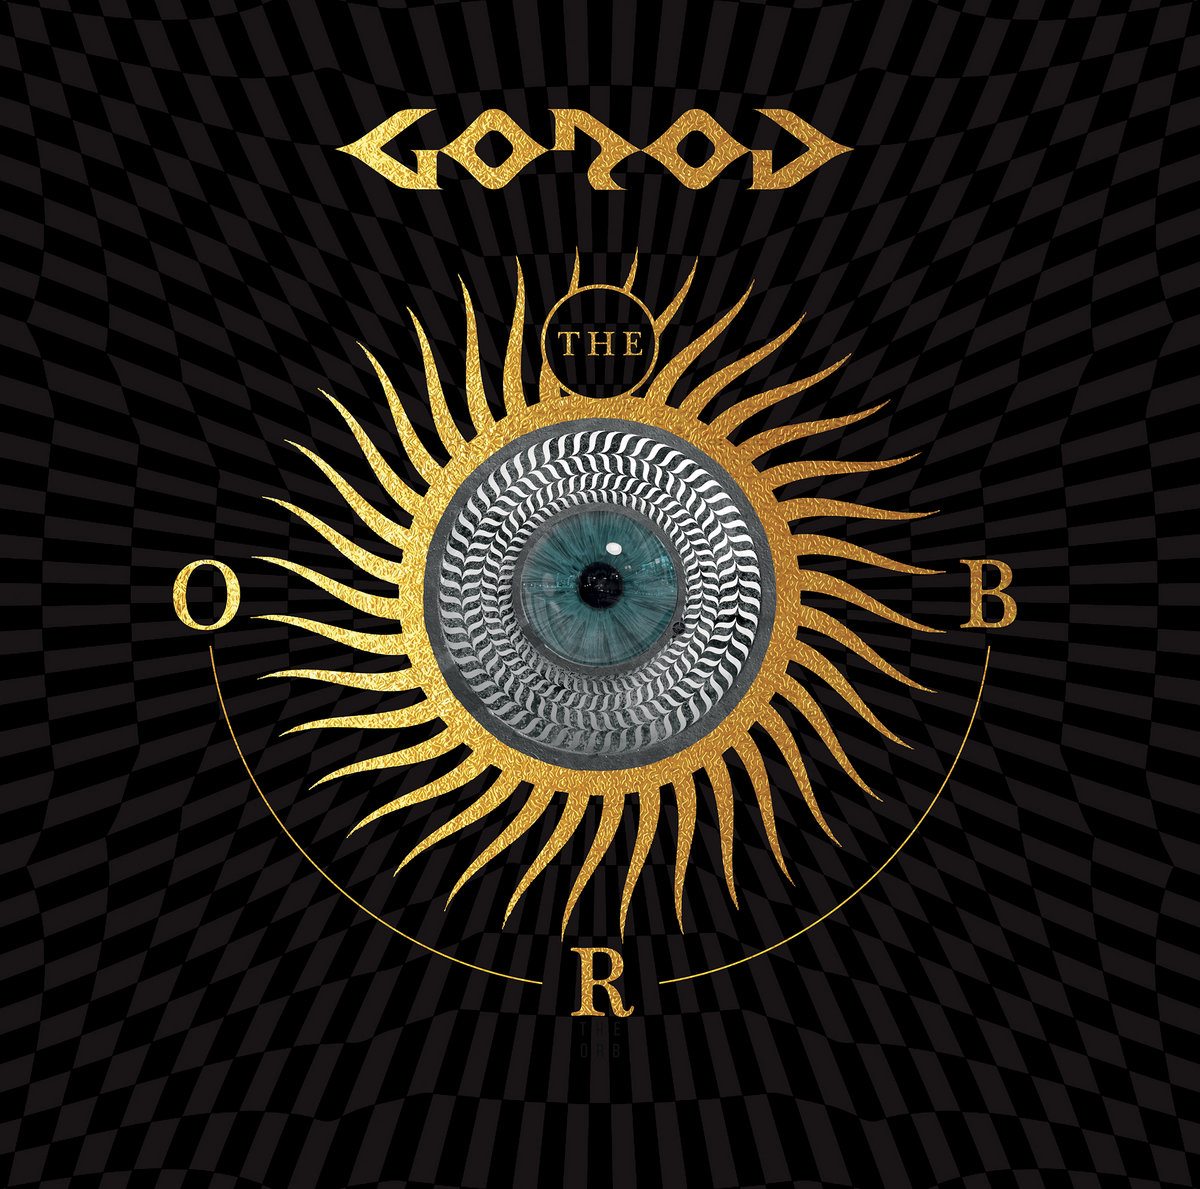 Gorod - "The Orb" - 2023